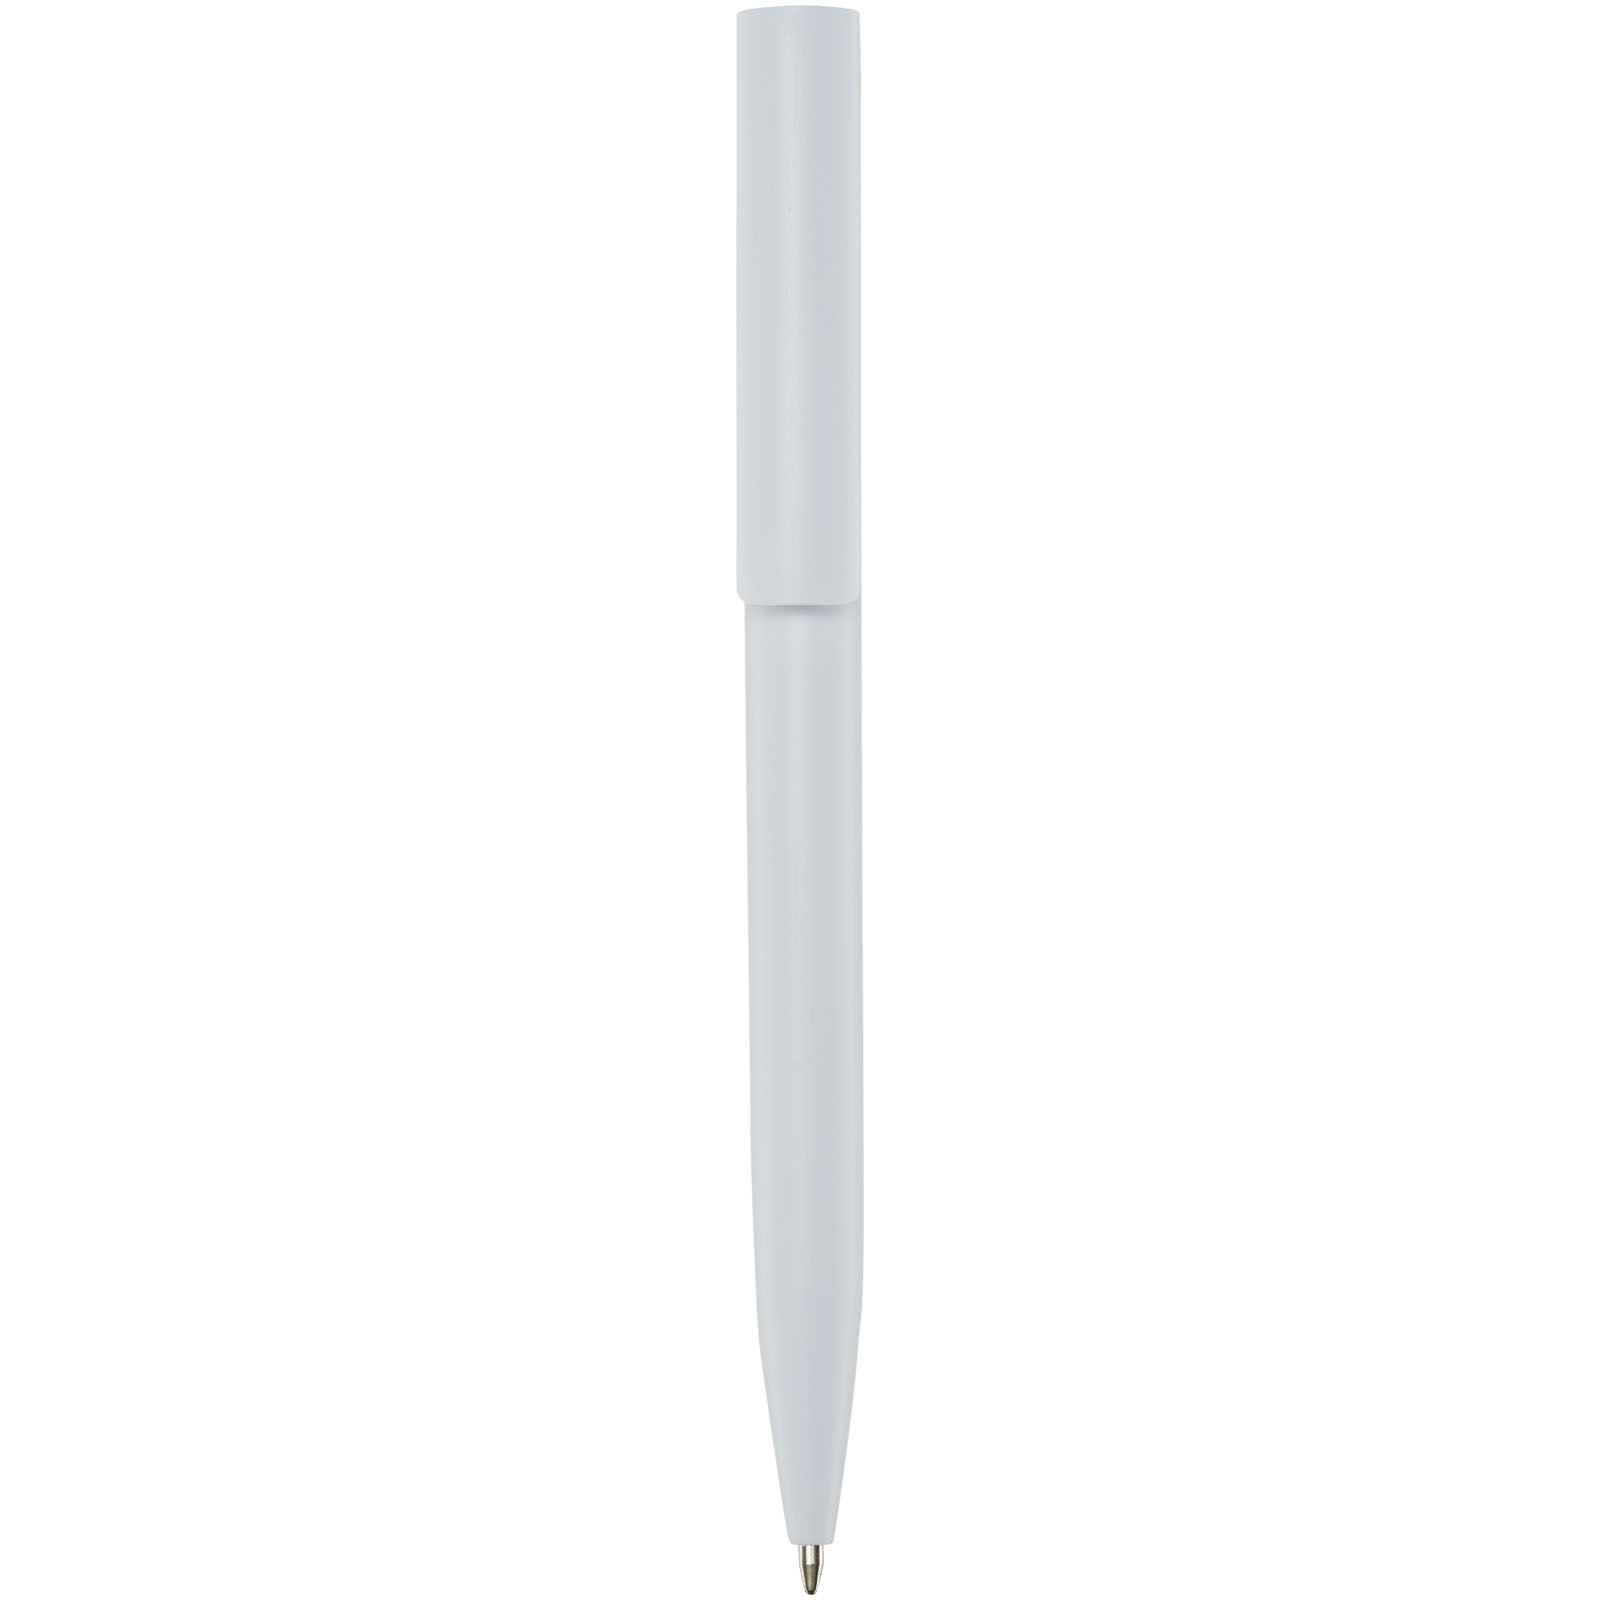 Ballpoint Pens - Unix recycled plastic ballpoint pen